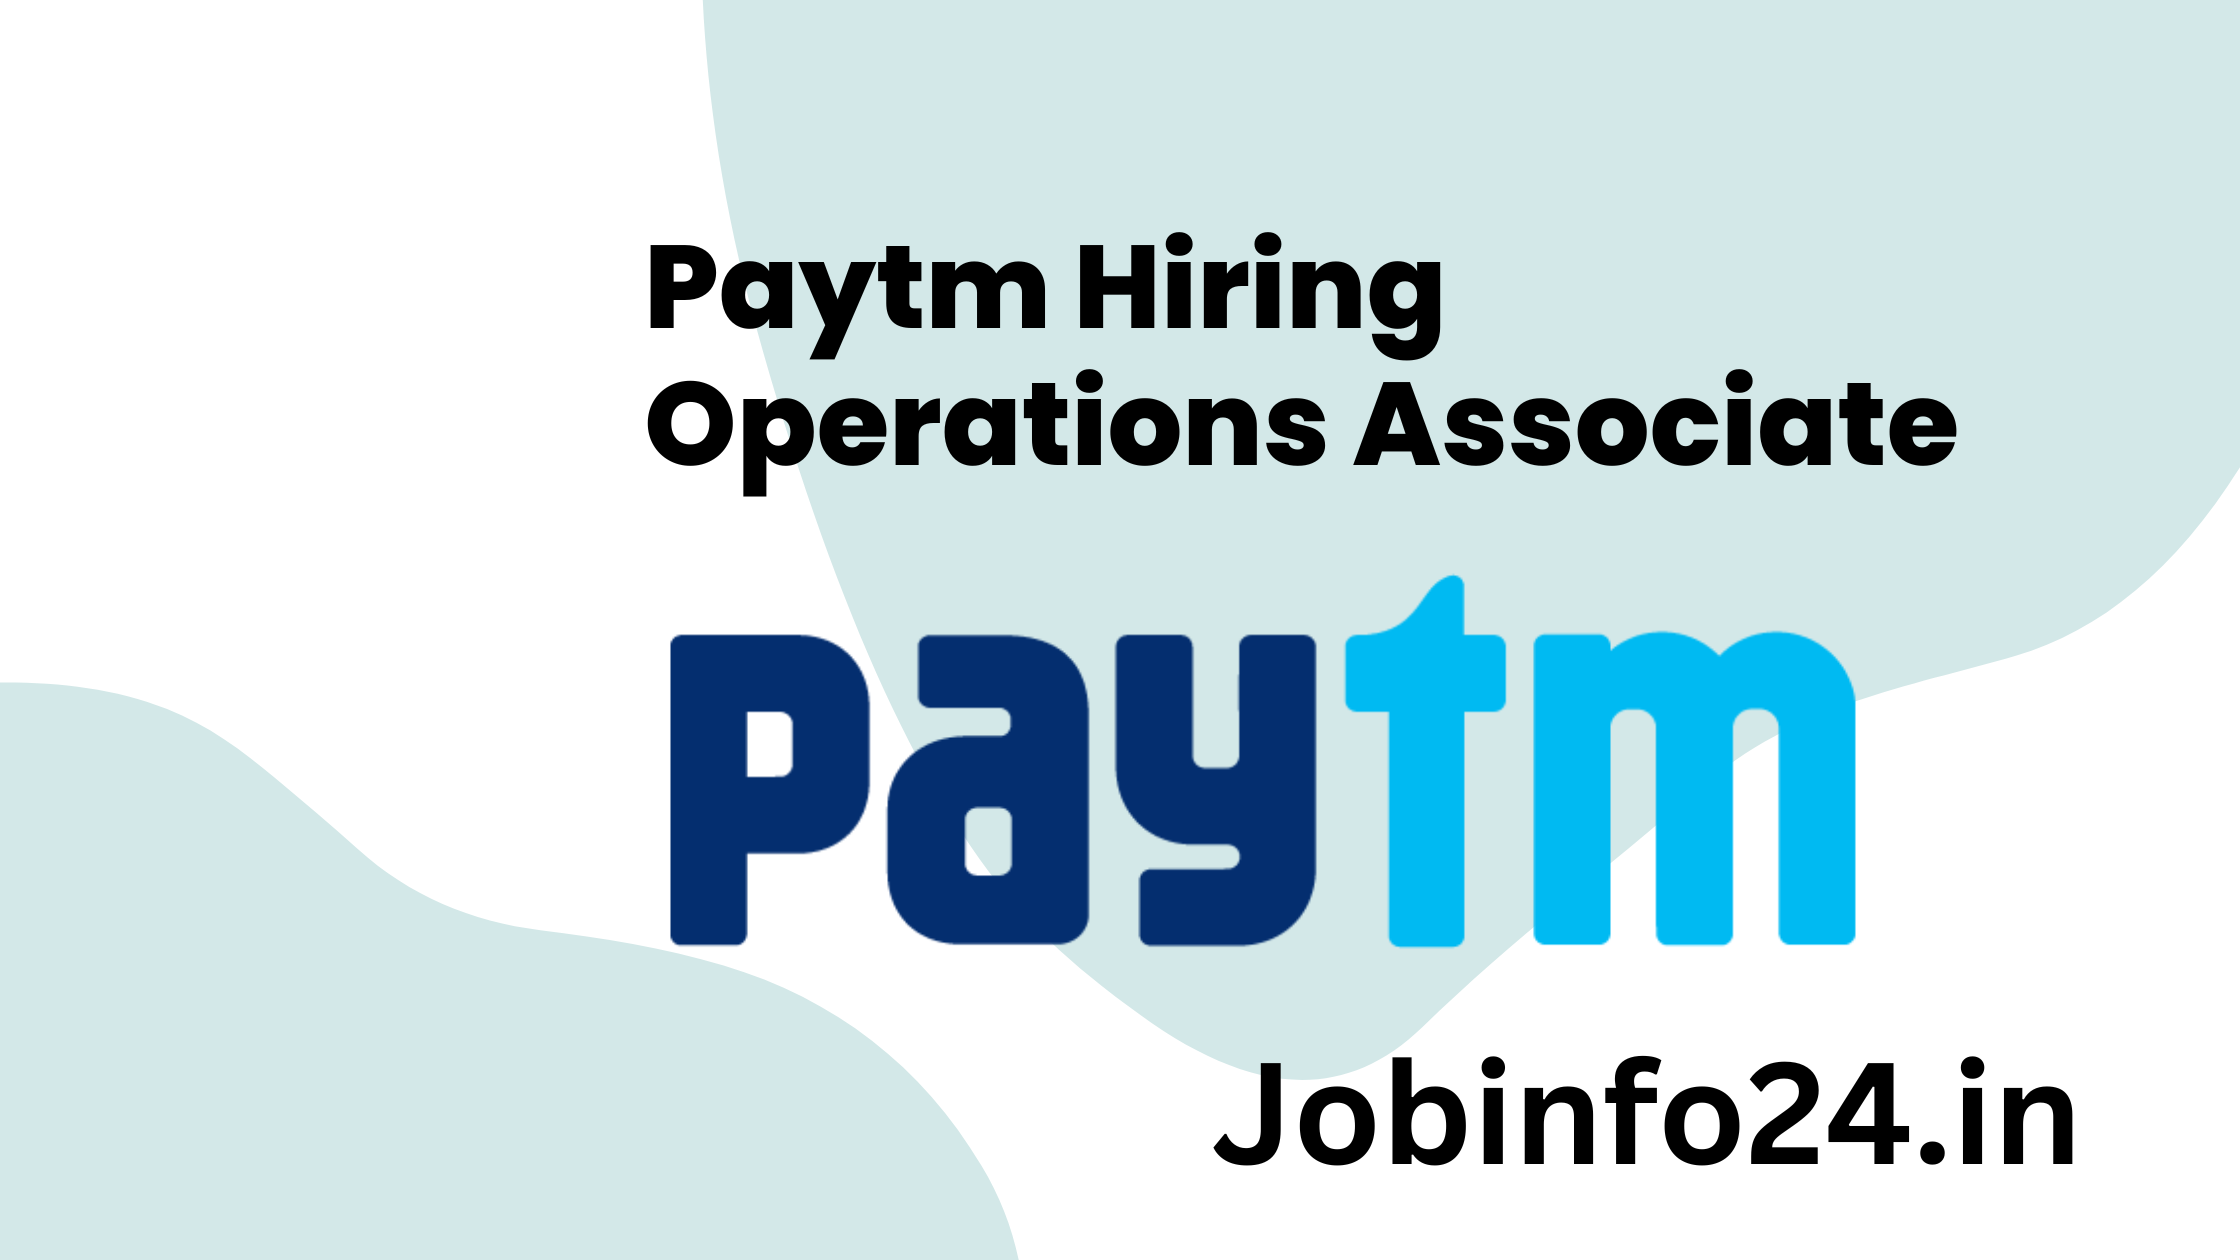 Paytm Hiring Operations Associate